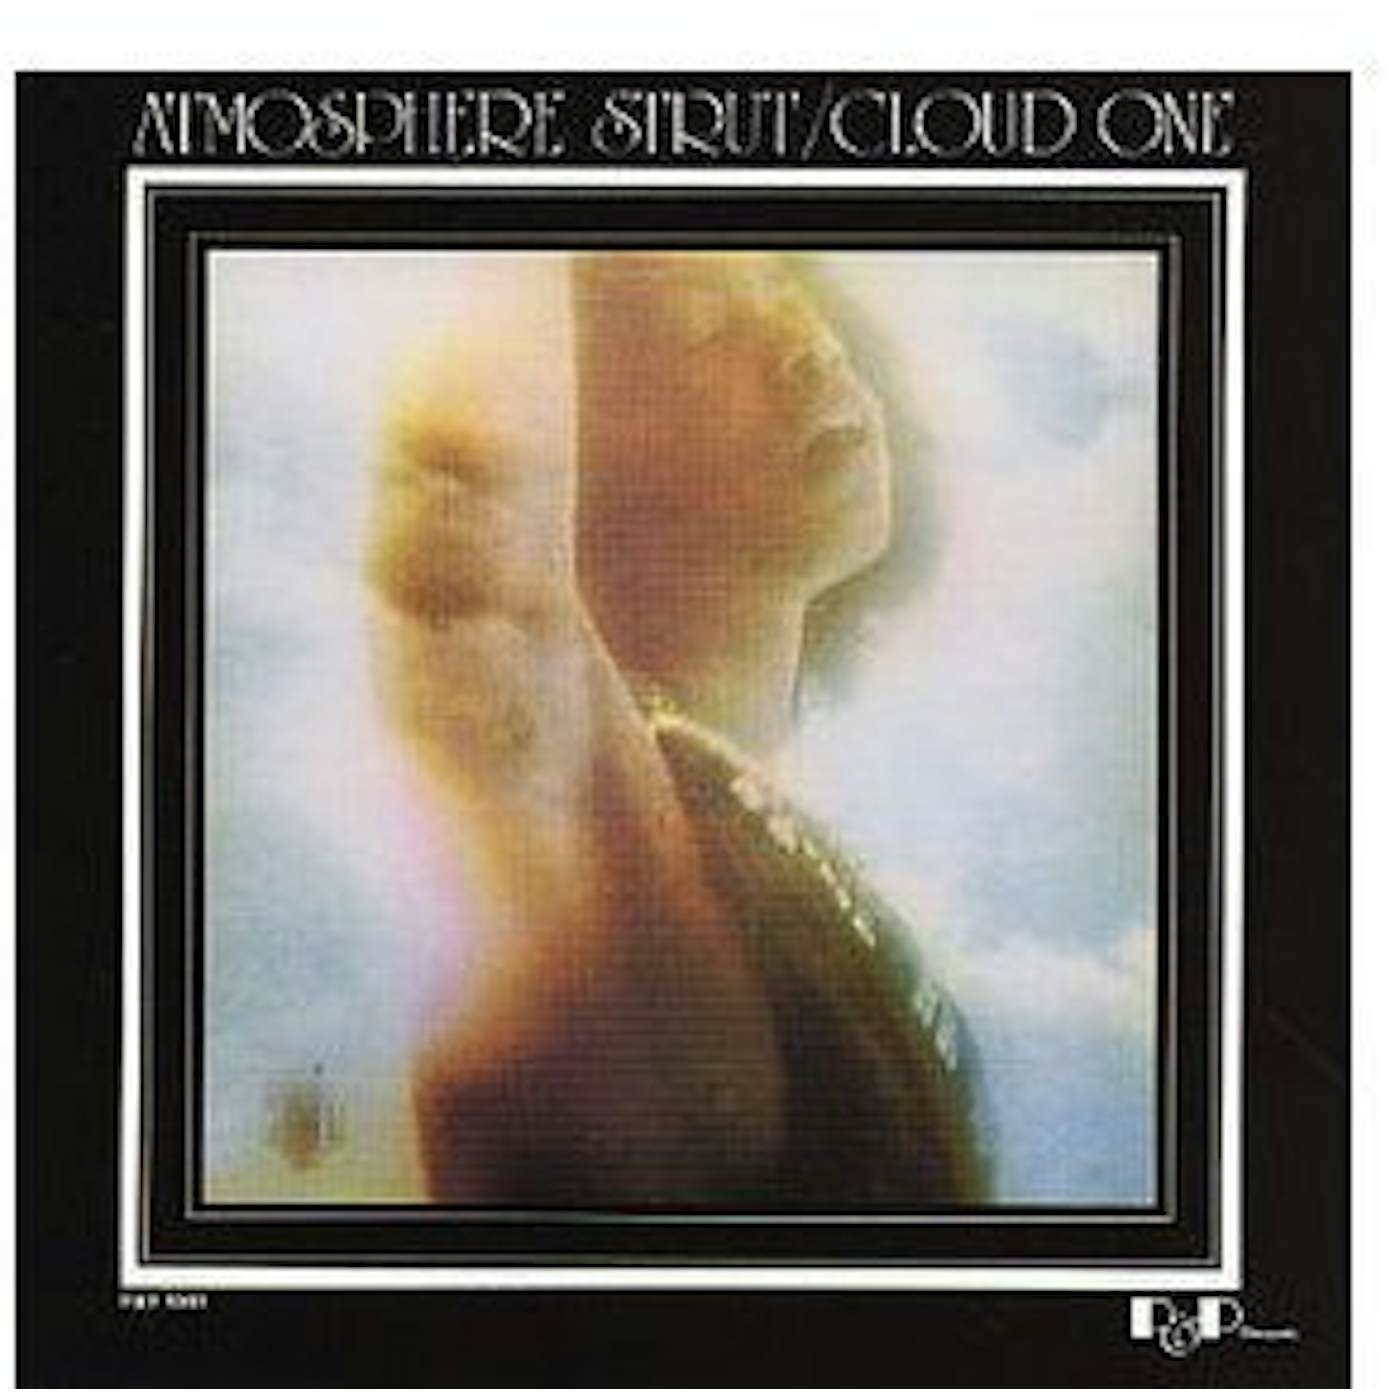 Cloud One Atmosphere Strut Vinyl Record